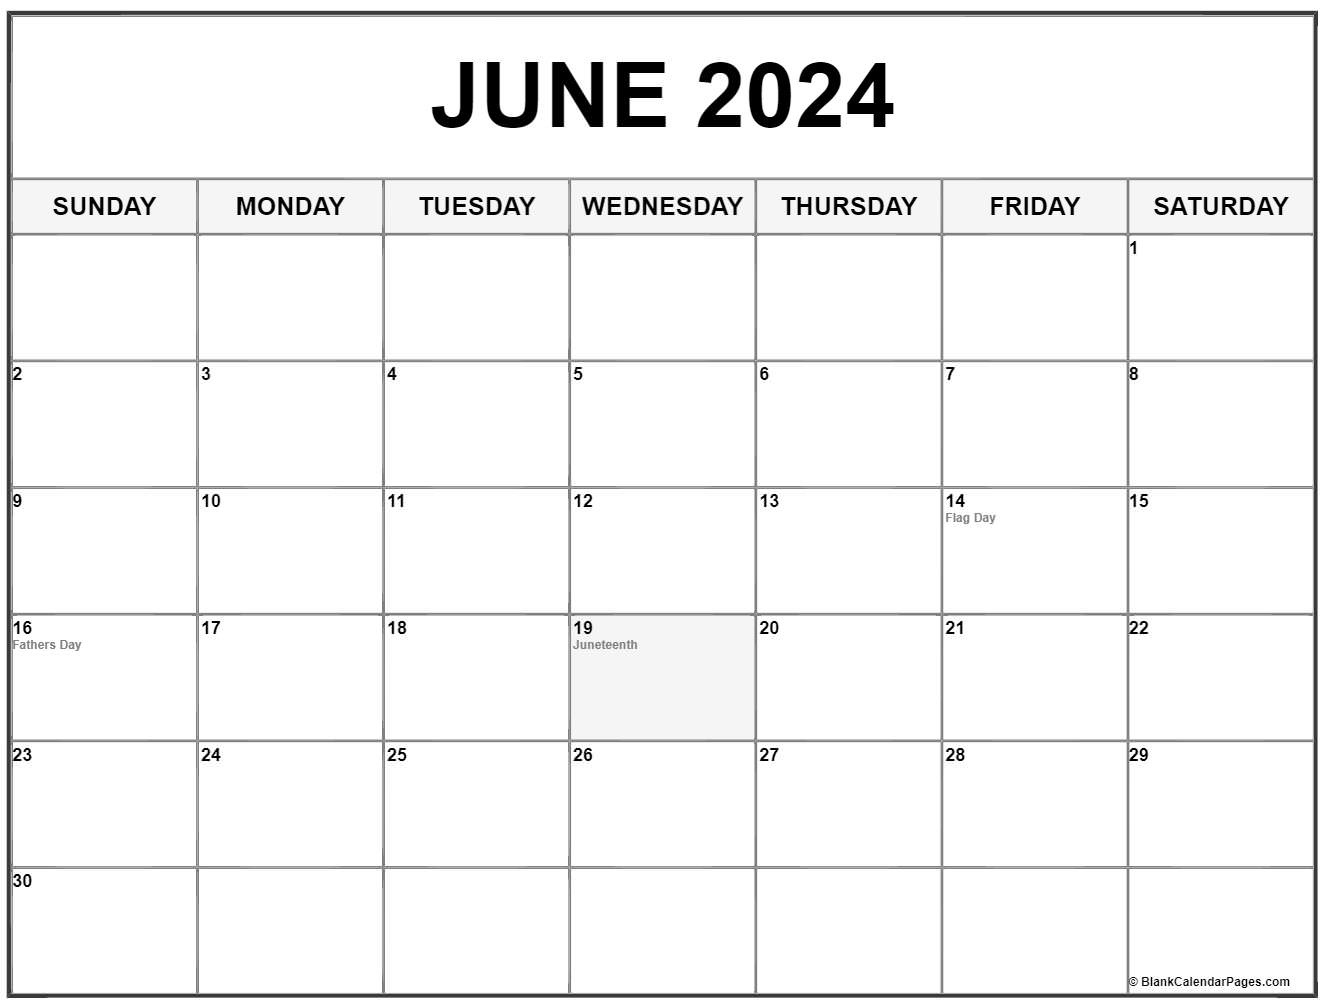 June 2024 With Holidays Calendar inside June 2024 Holiday Calendar